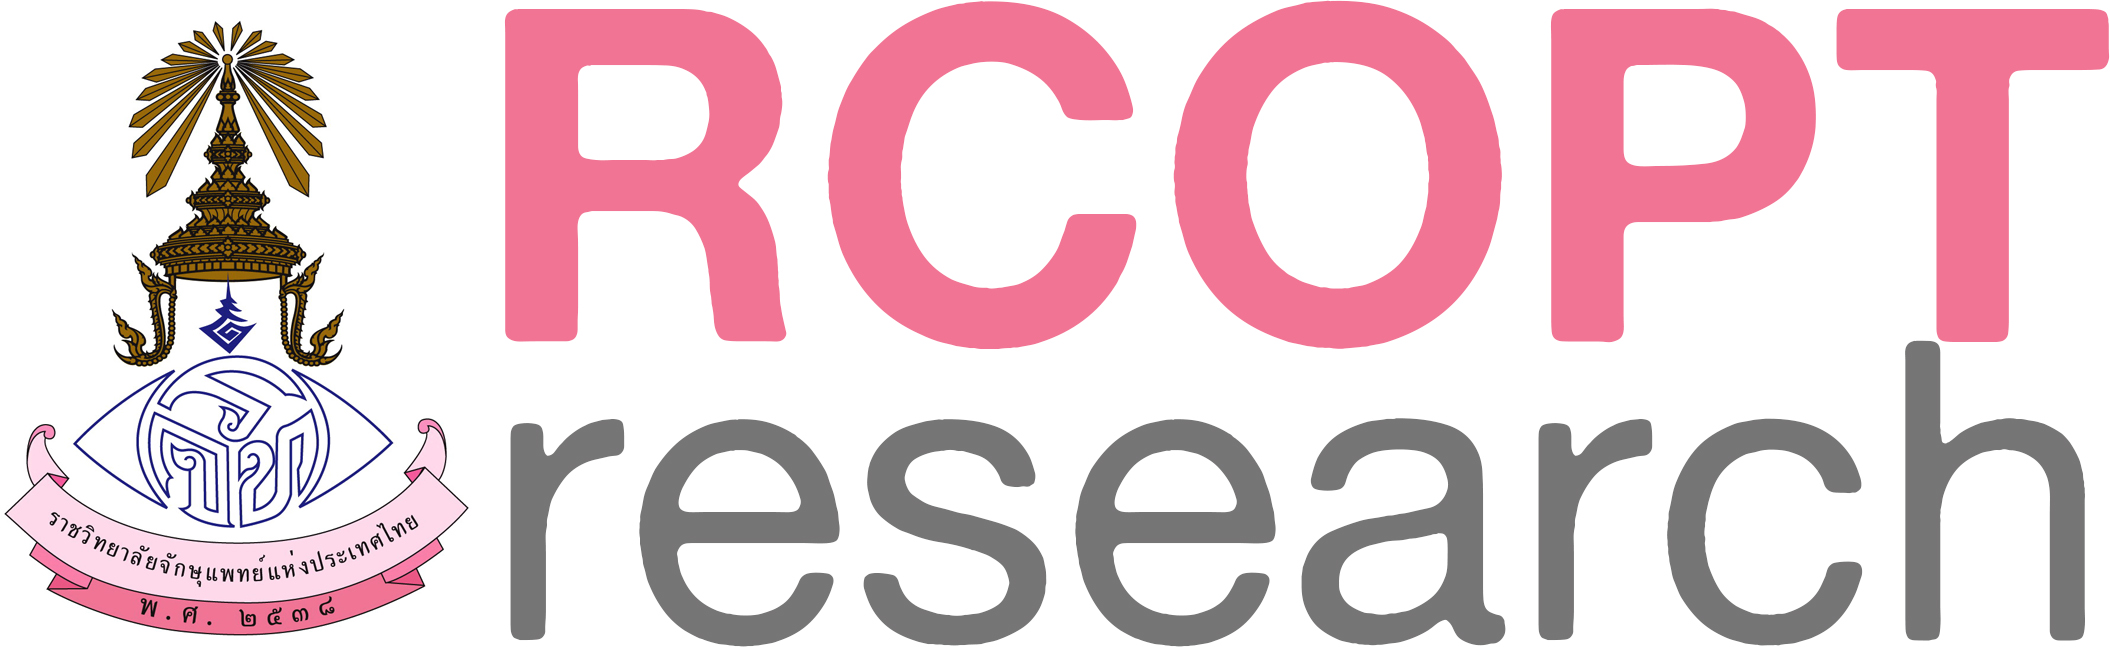 2037RCOPT research logo1.jpg